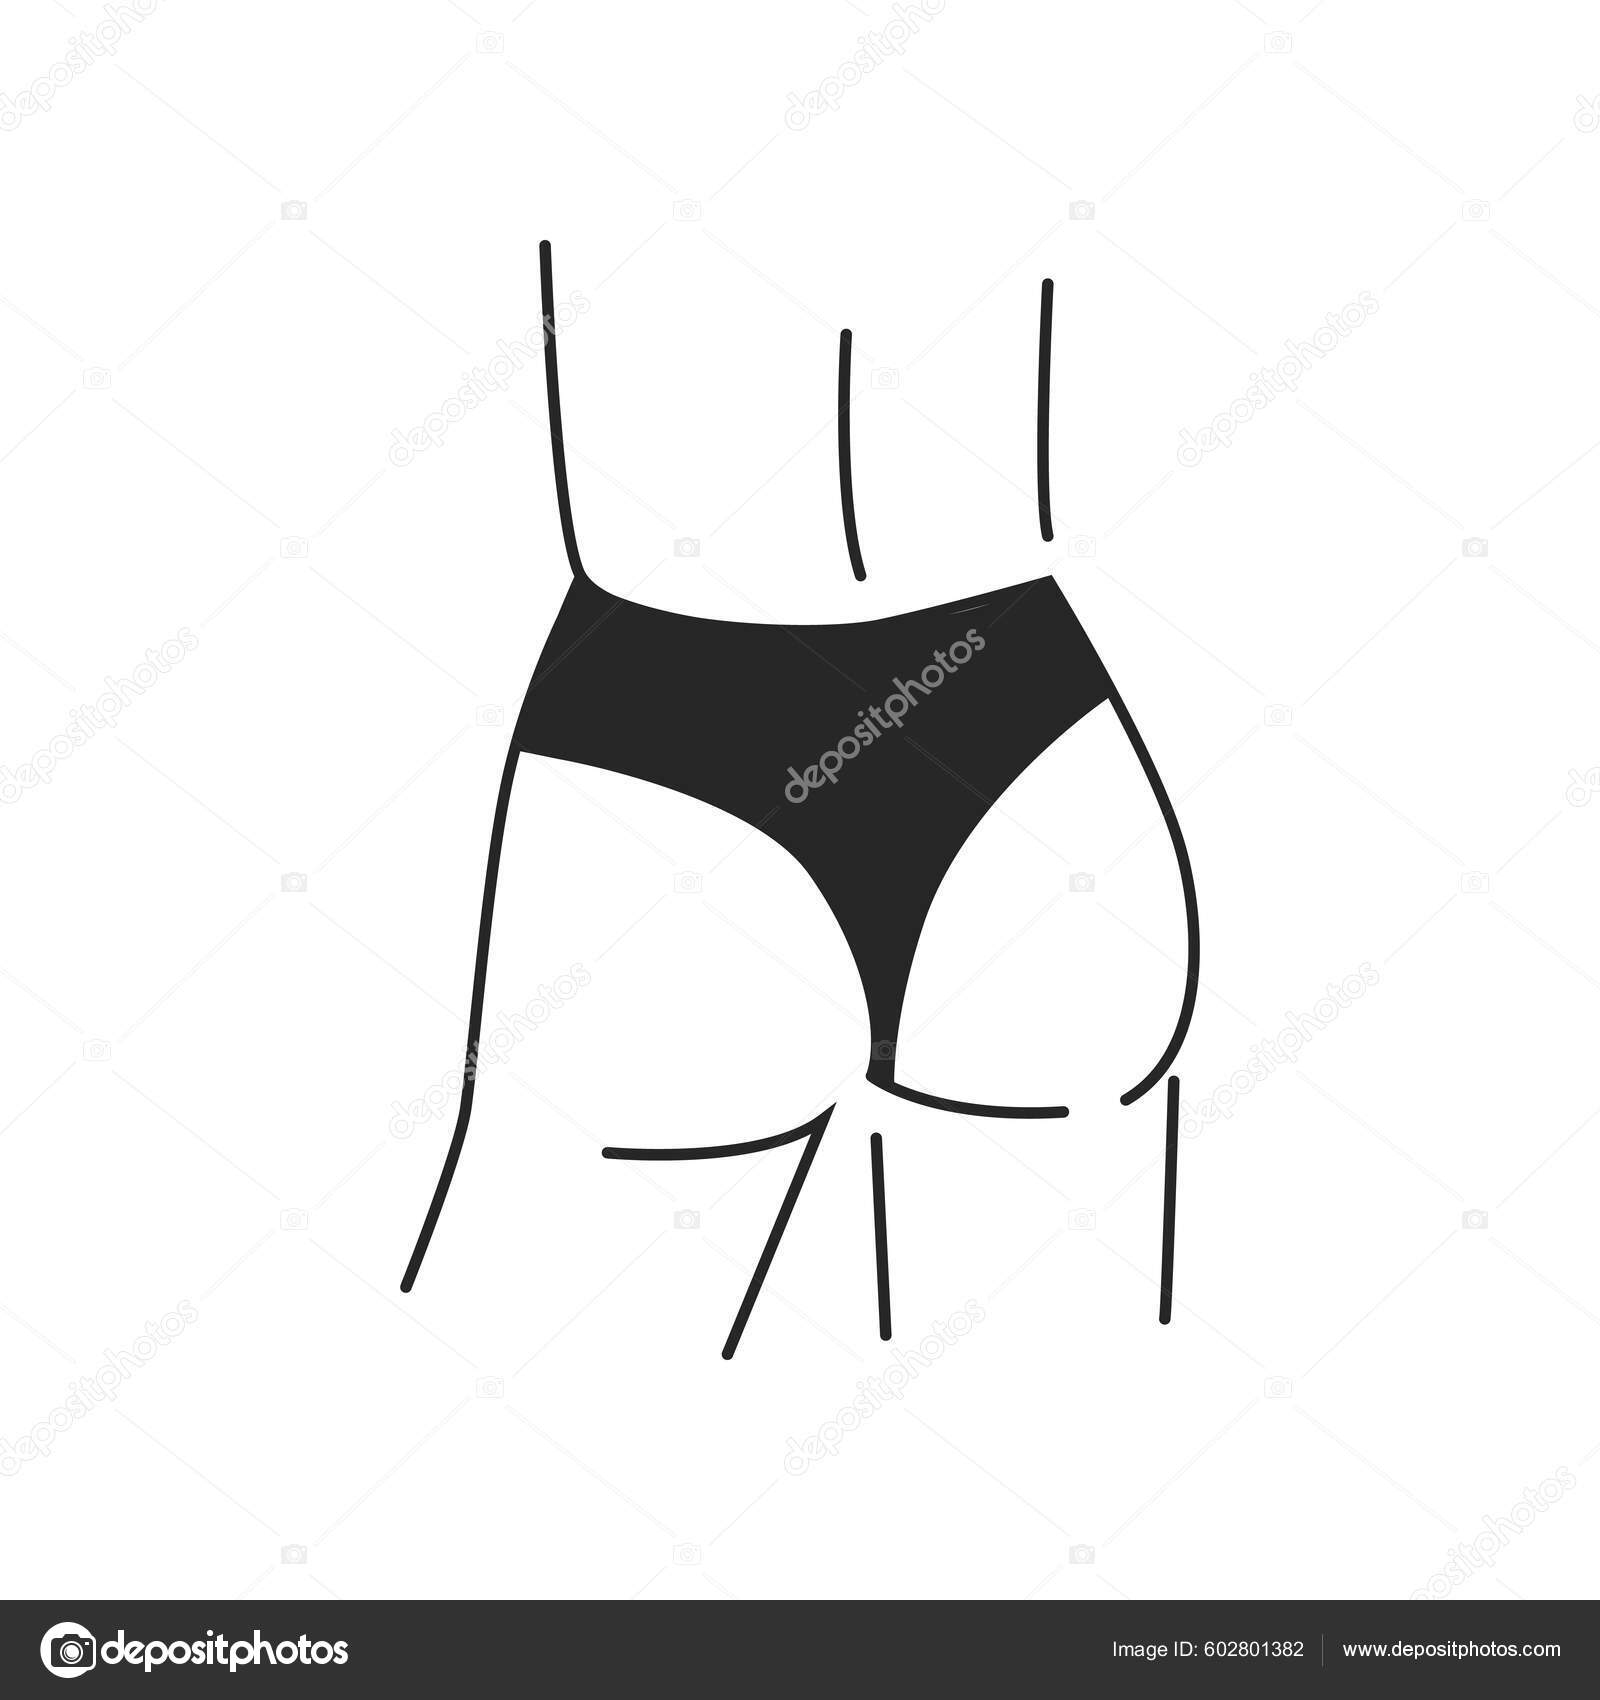 https://st.depositphotos.com/14490296/60280/v/1600/depositphotos_602801382-stock-illustration-woman-butt-body-part-isolated.jpg